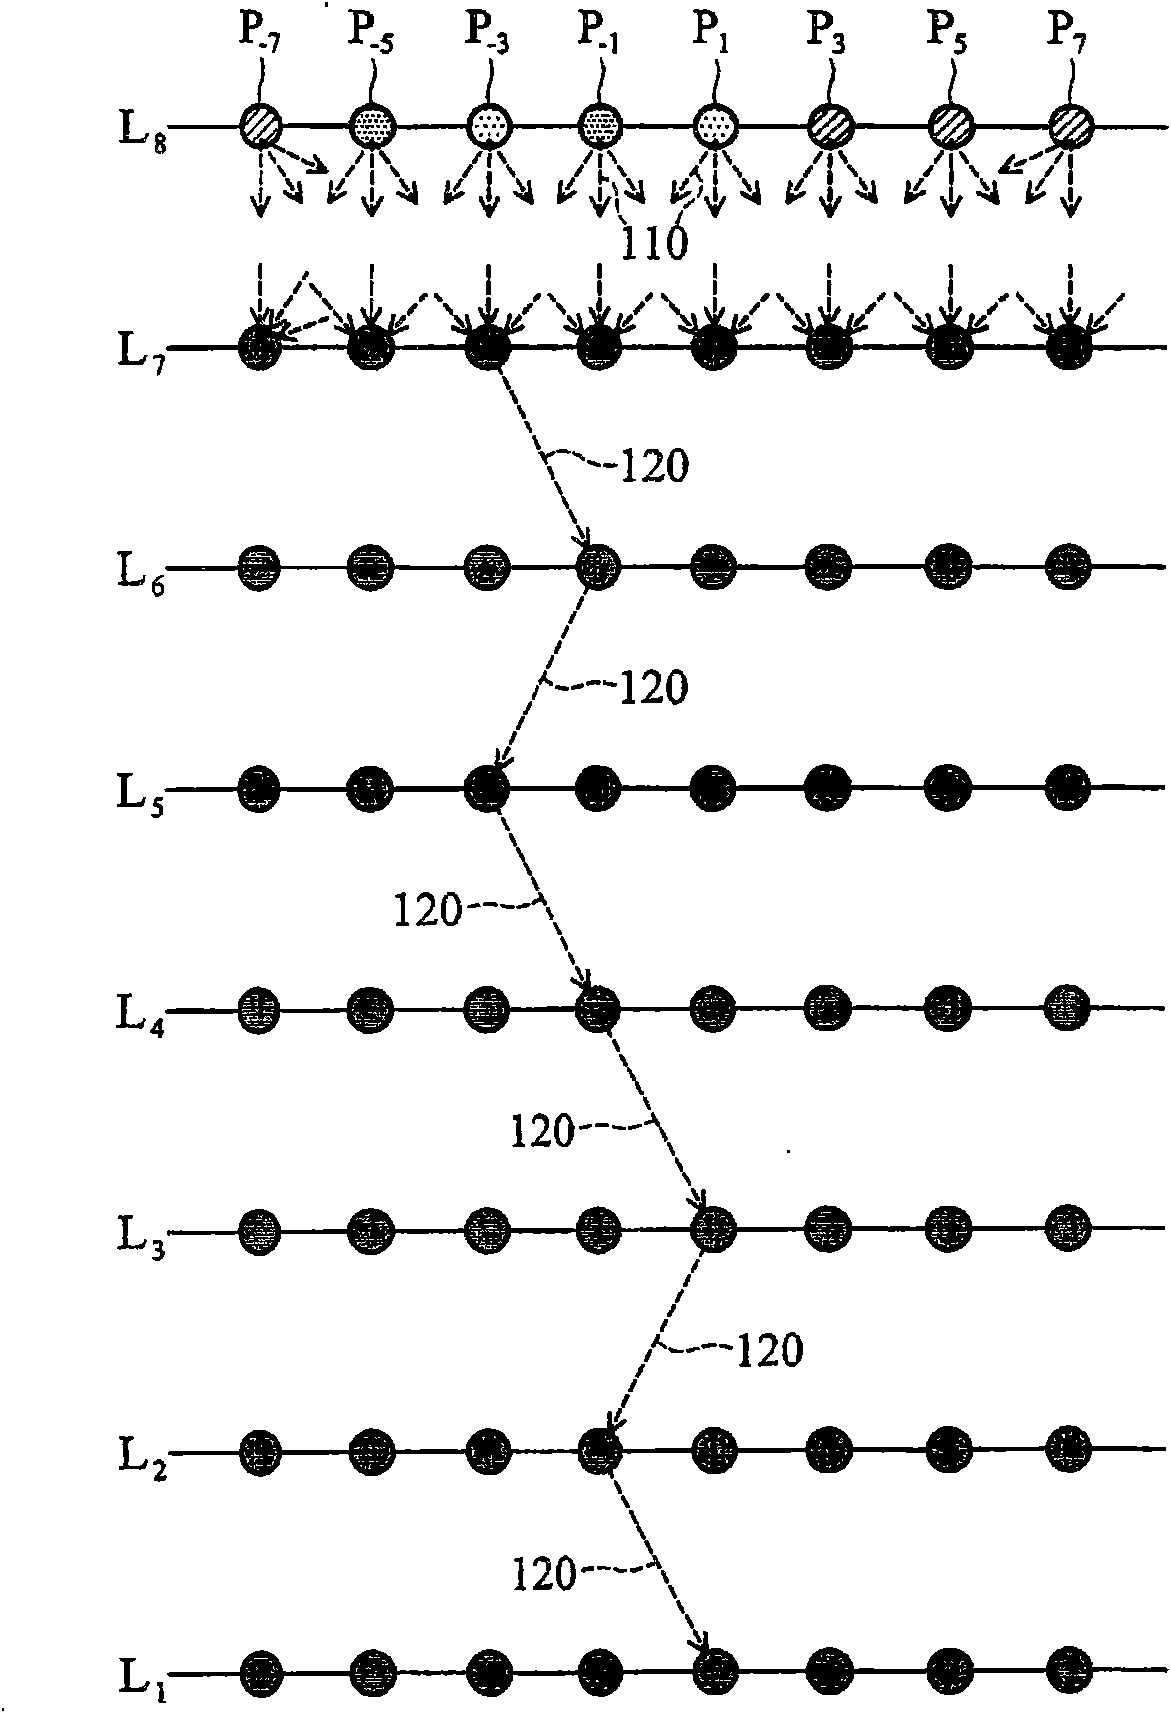 Symbol detector and sphere decoding method